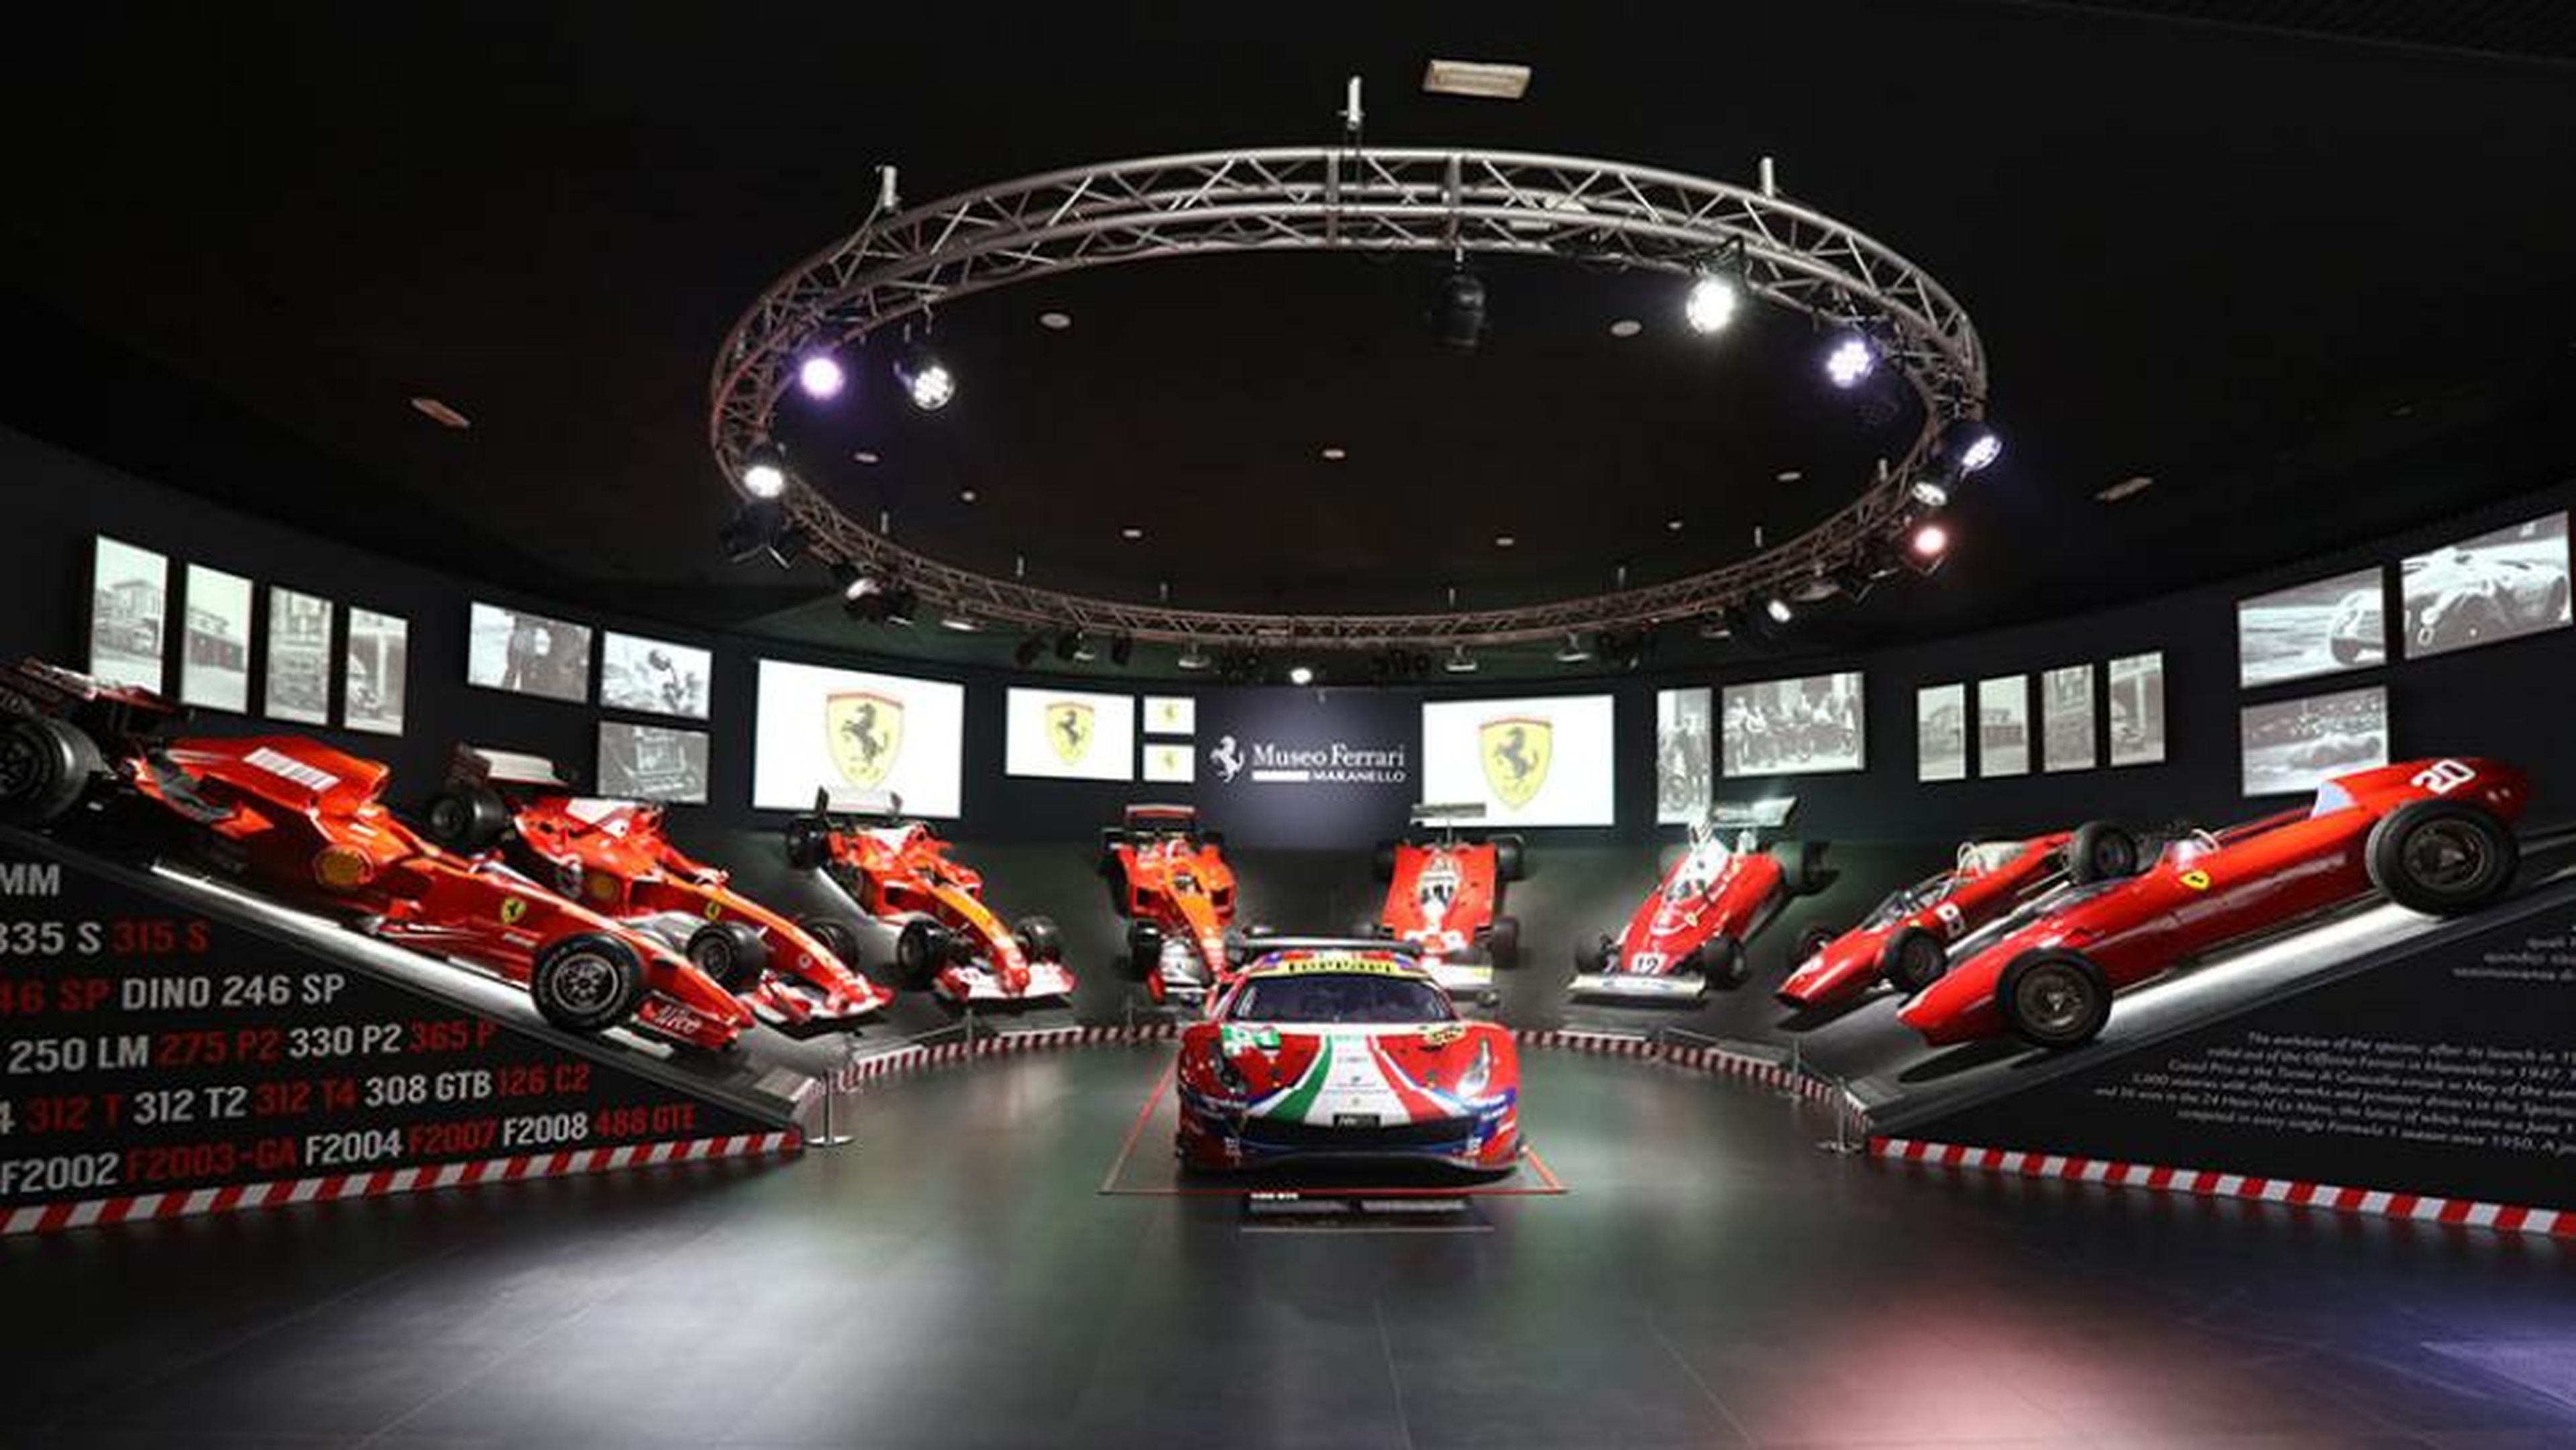 Mejores museos coches visitar - Ferrari